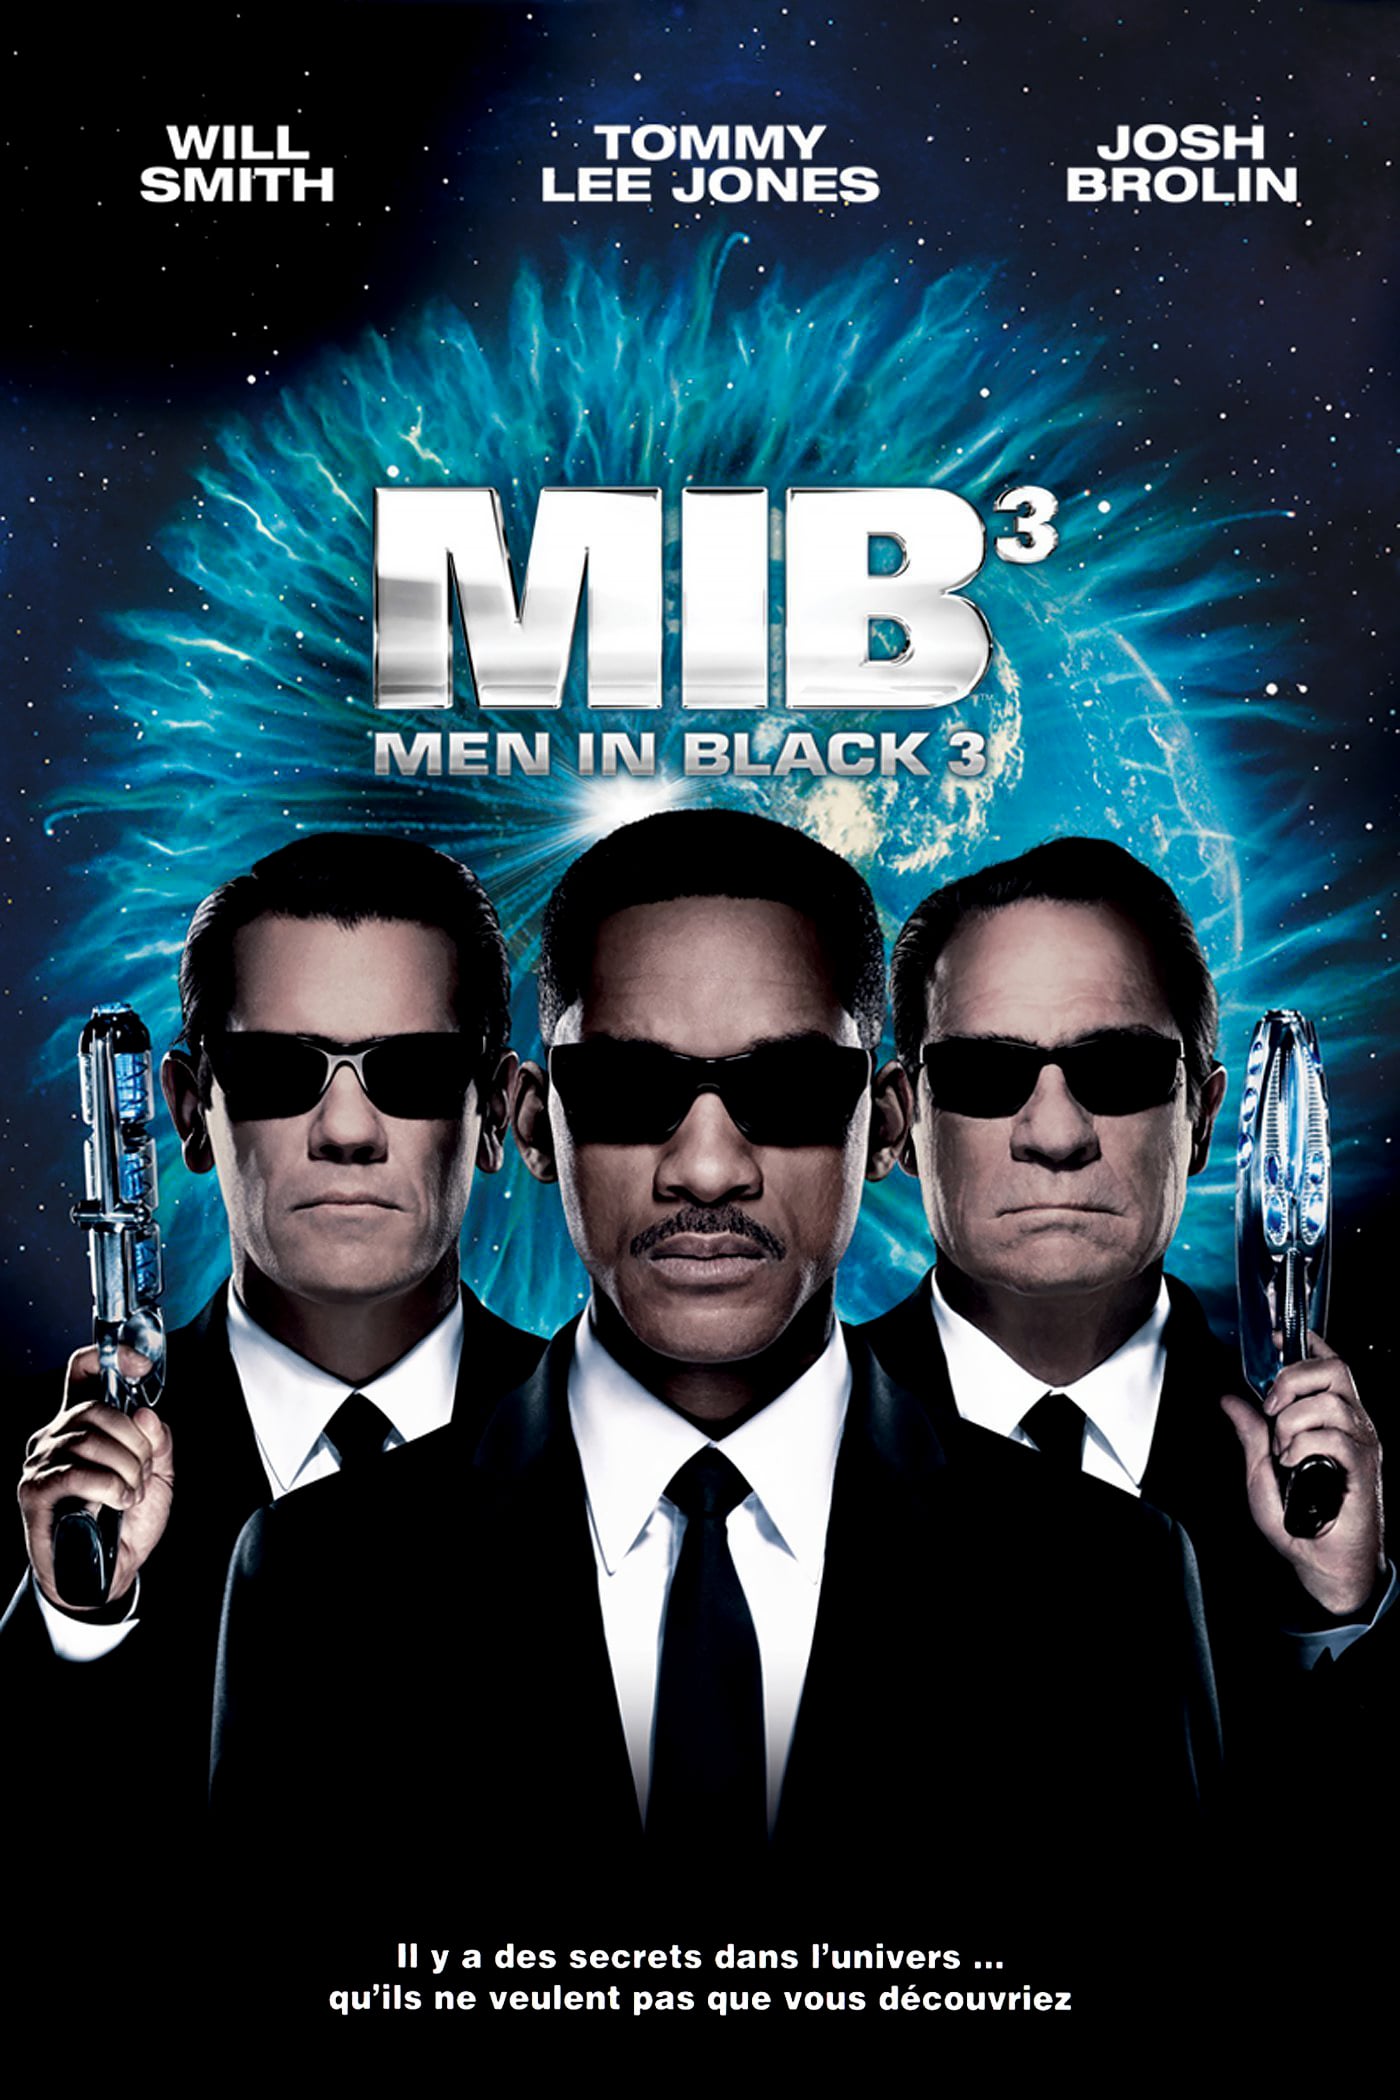 Affiche du film "Men In Black III"